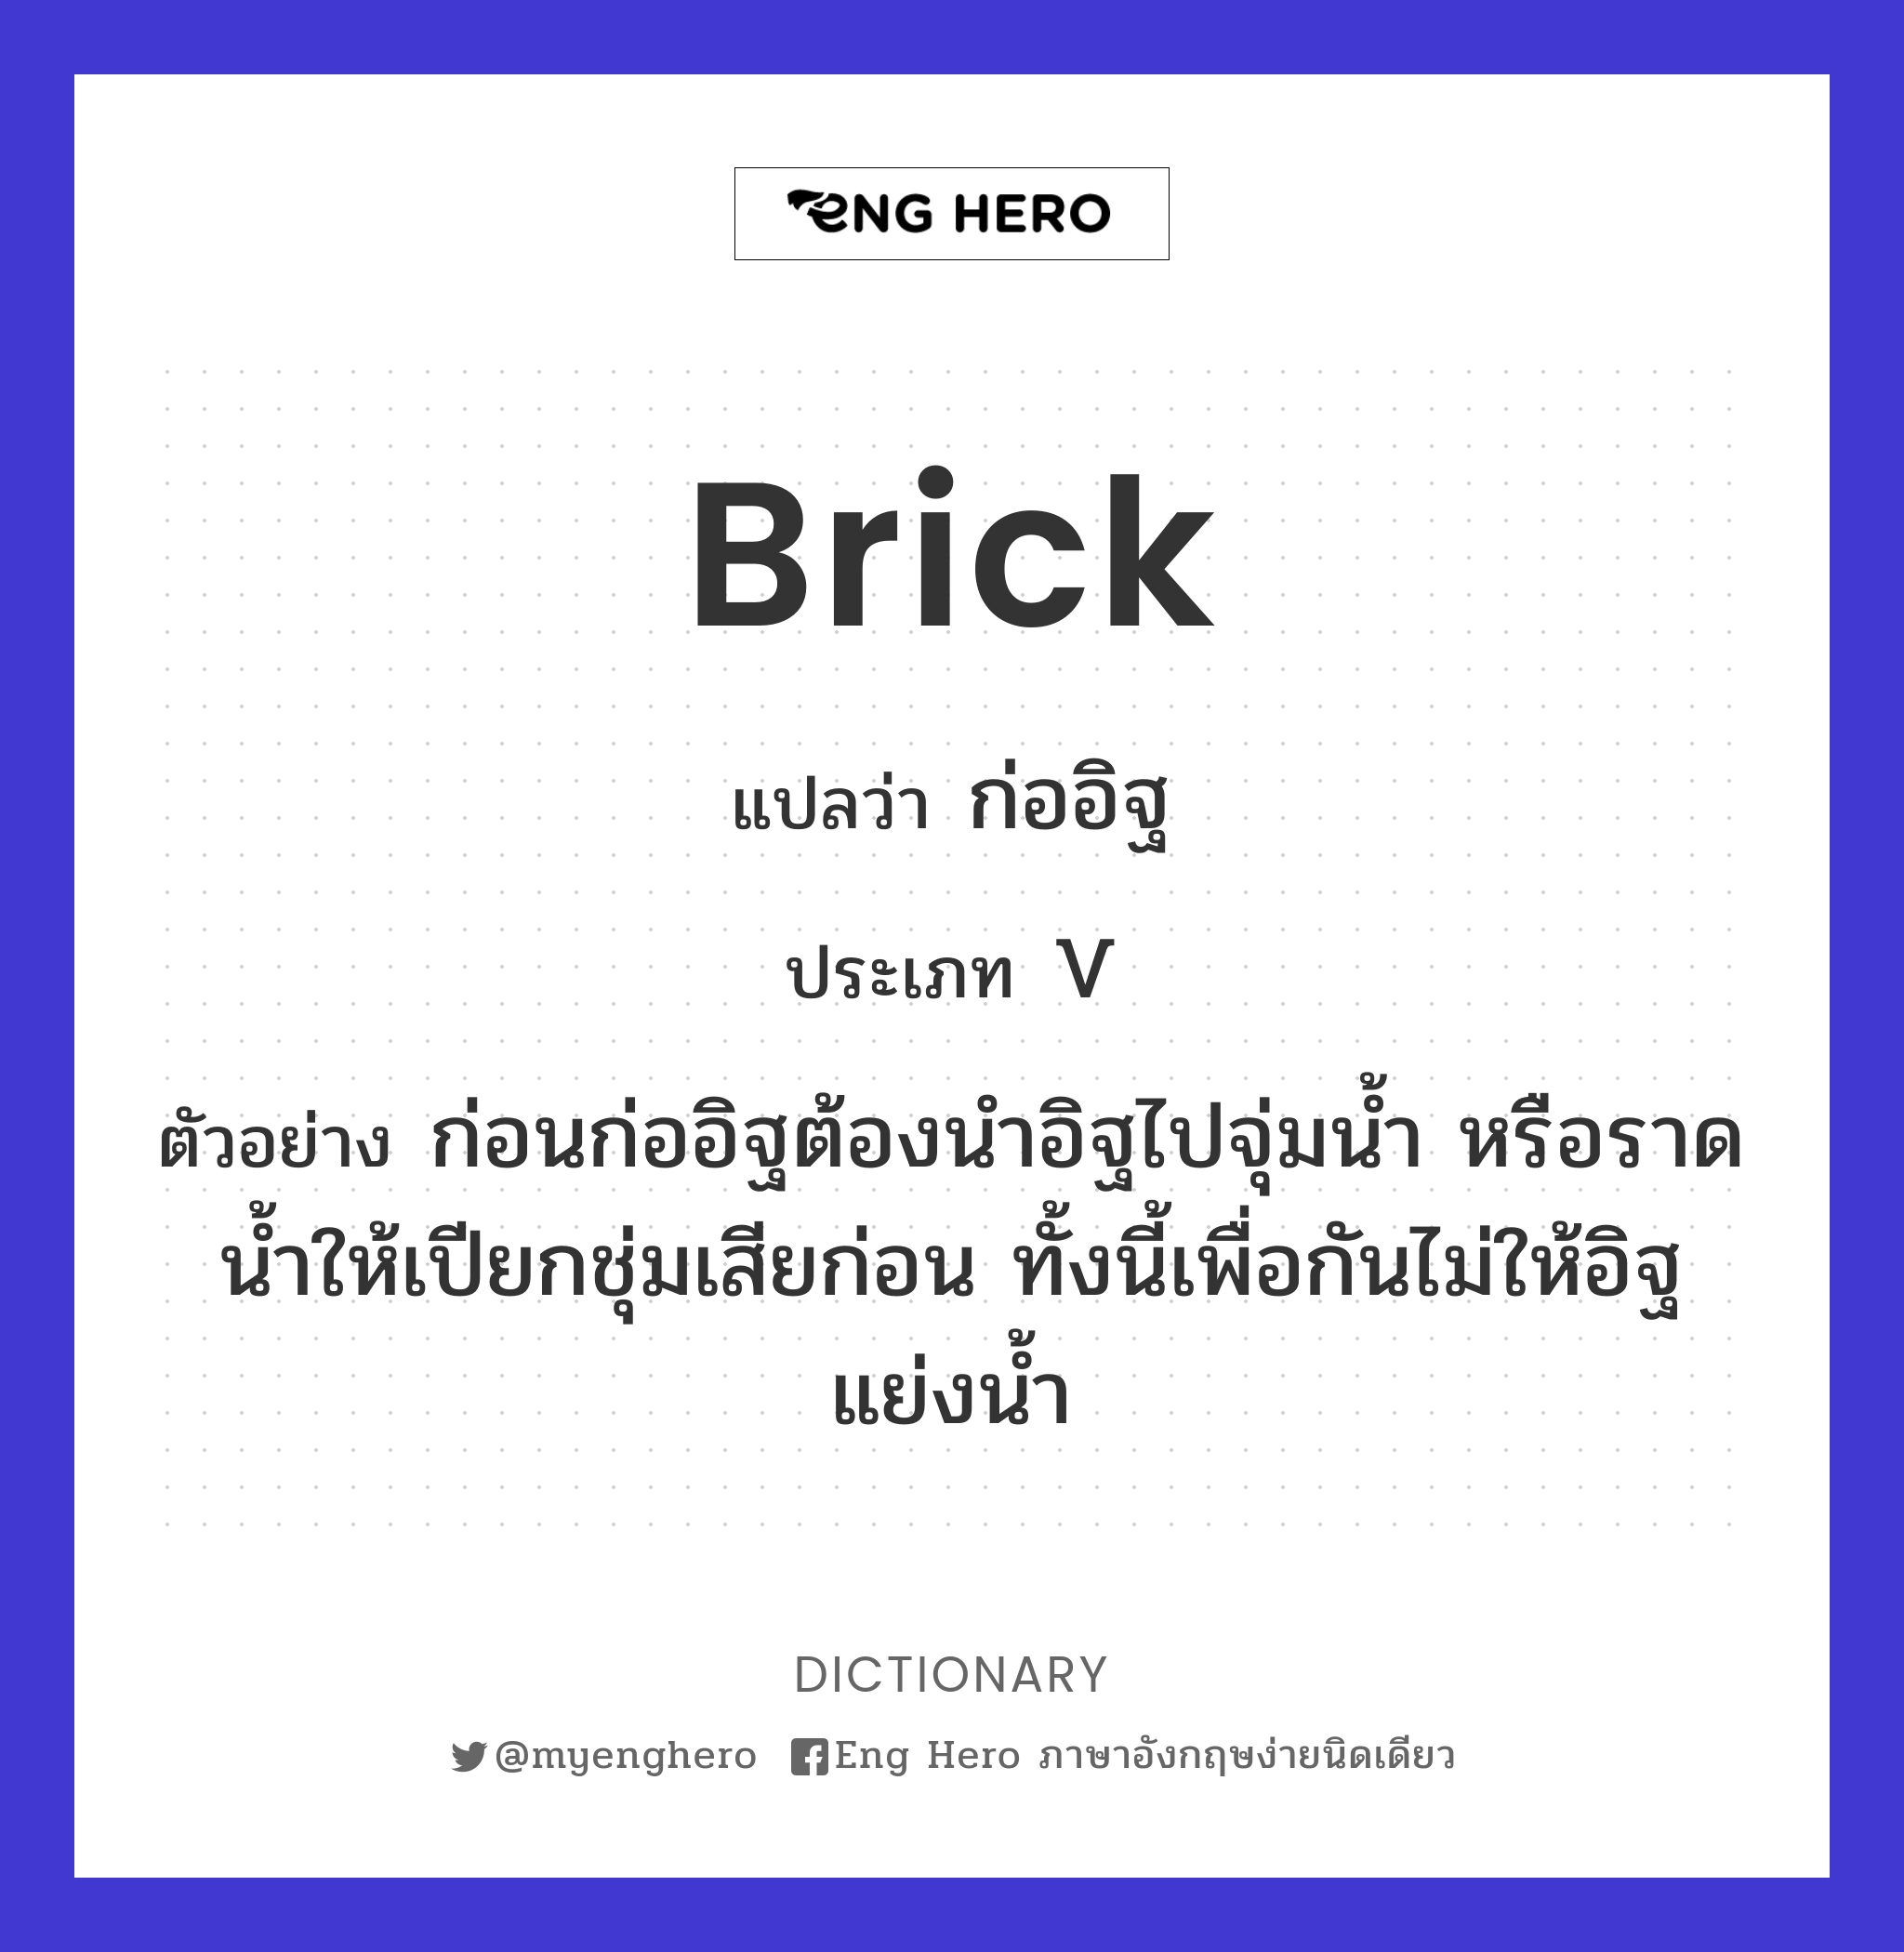 brick